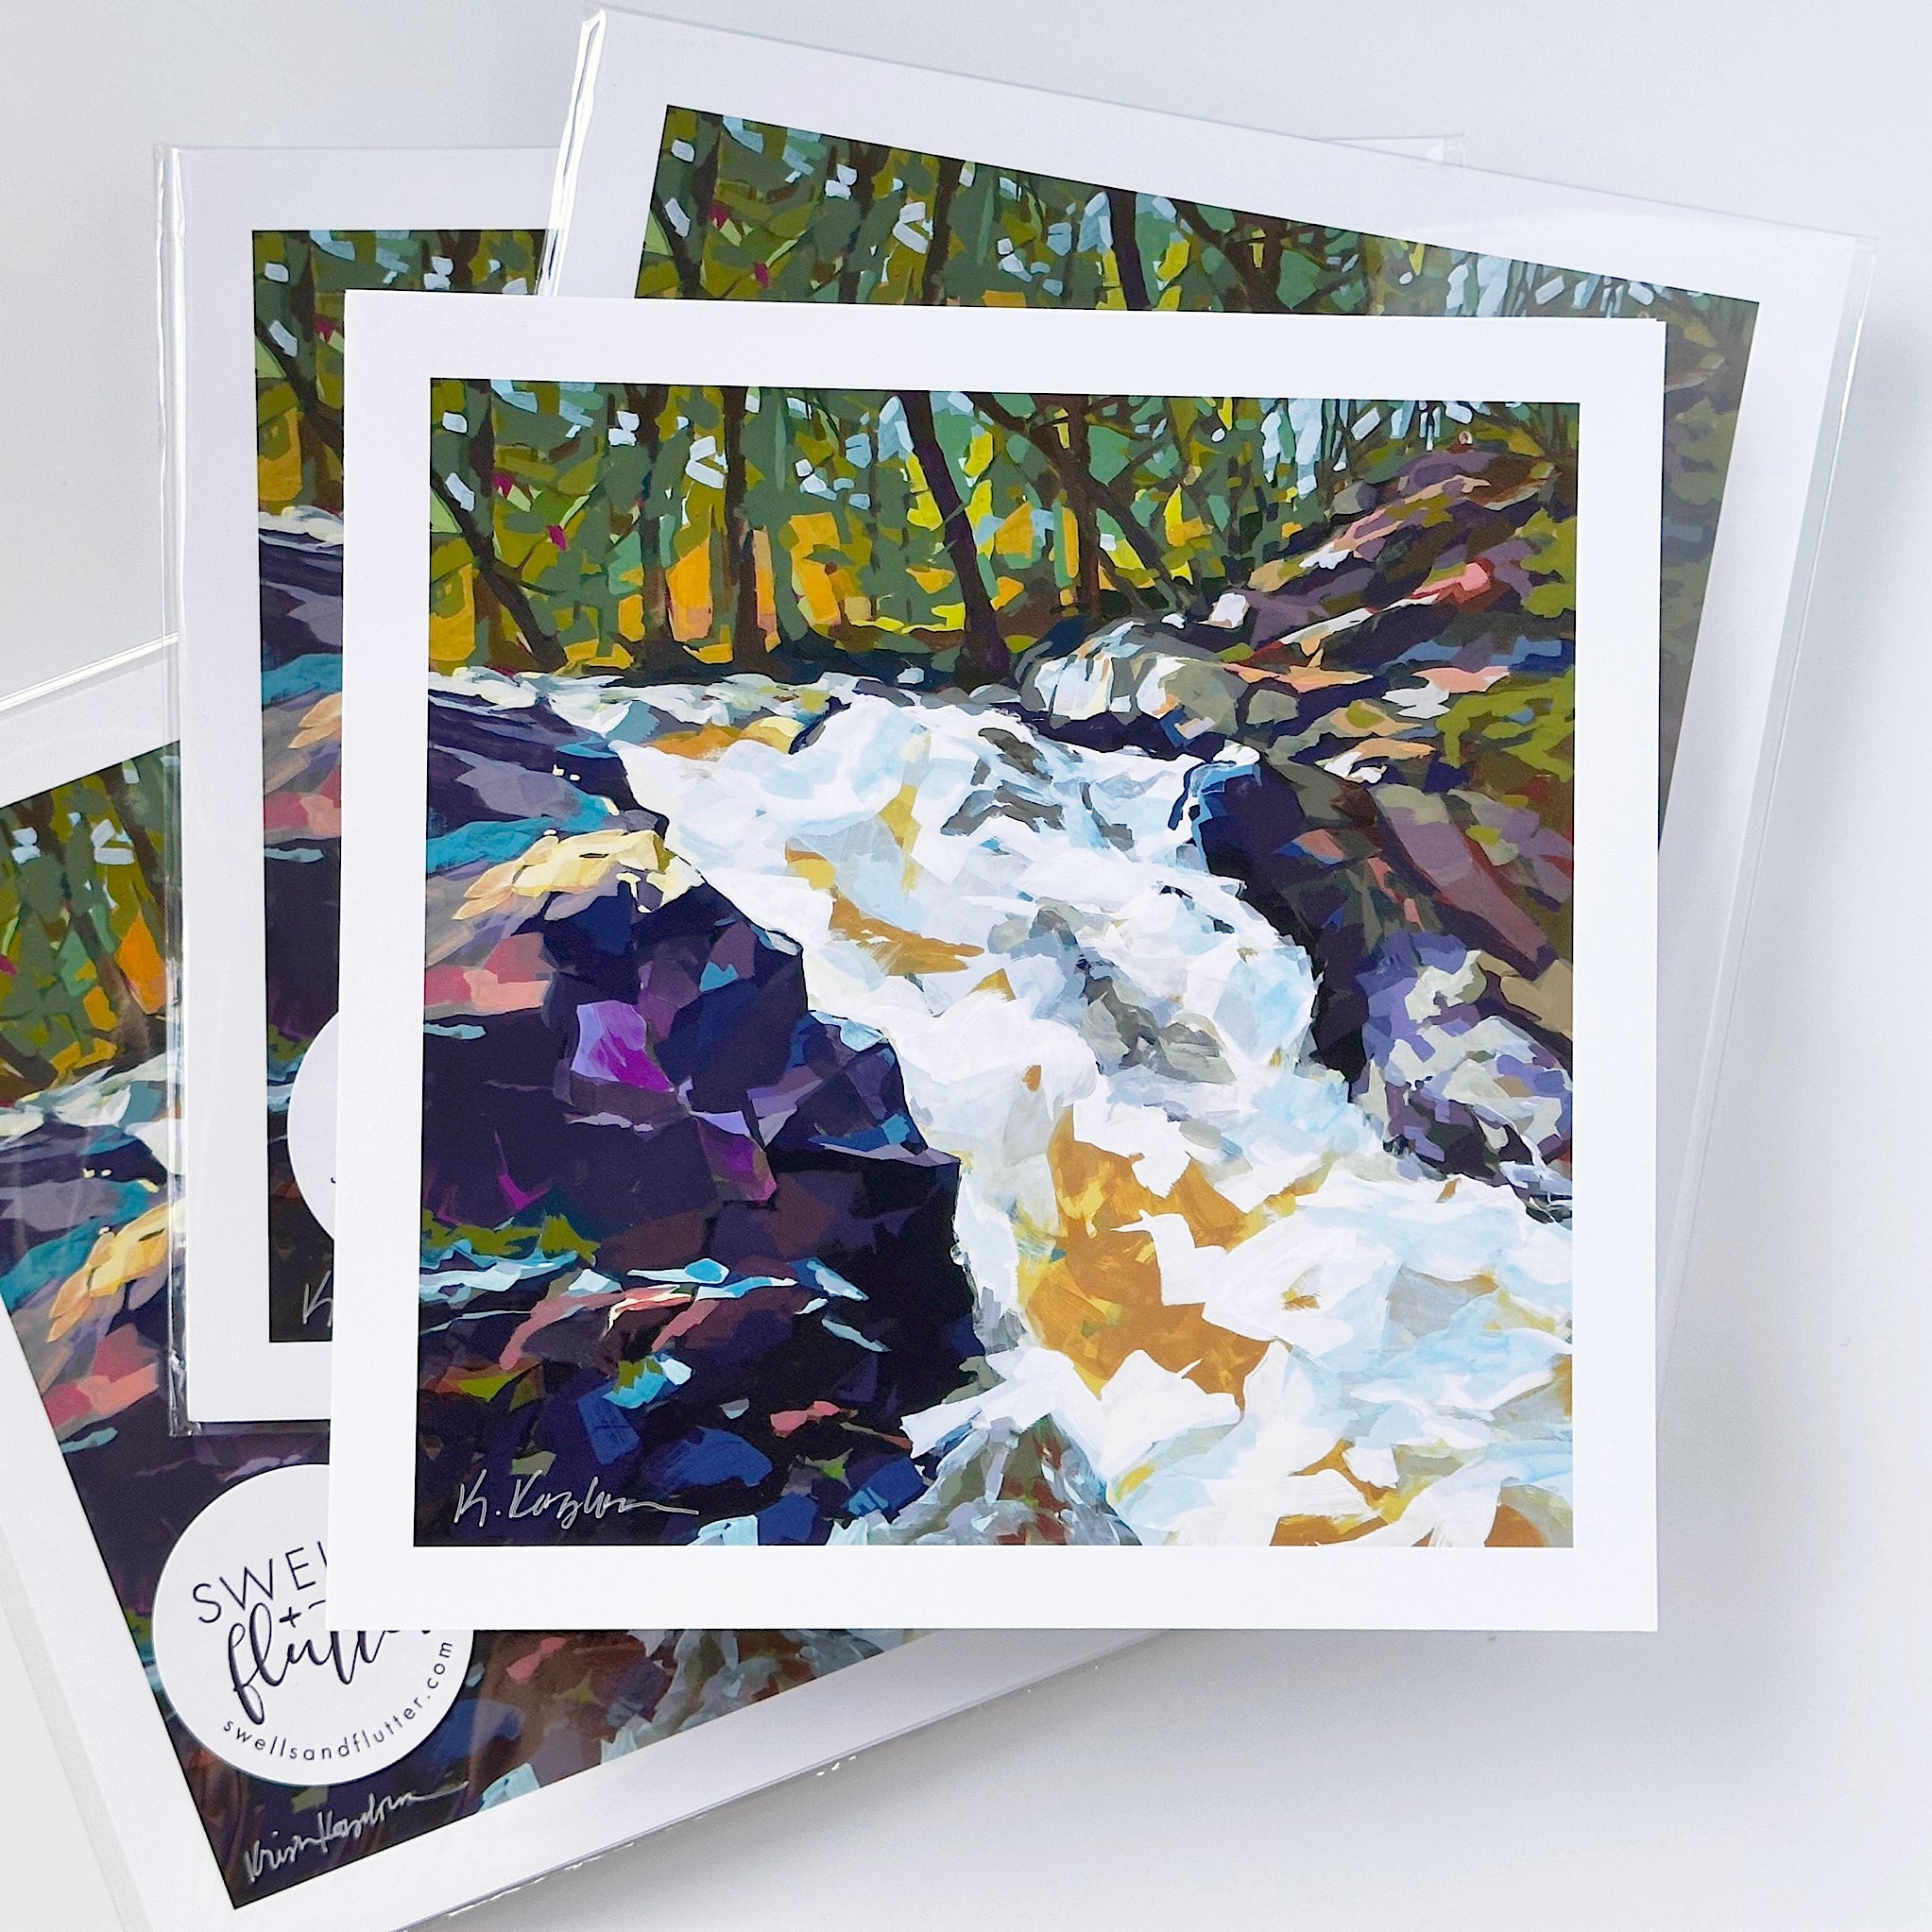 "Chester Creek Falls” – Art Print